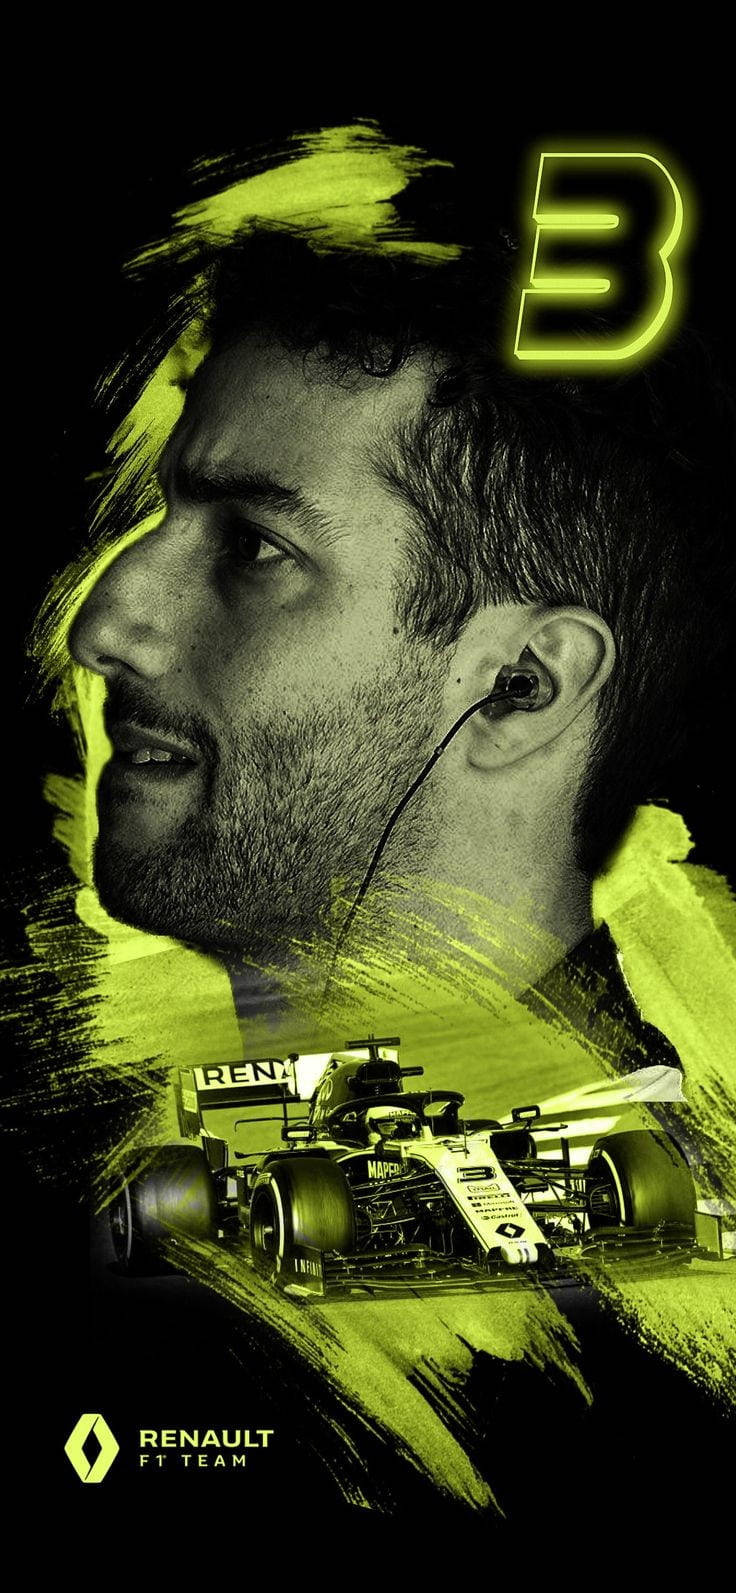 Daniel Ricciardo In Green And Black Abstract Wallpaper